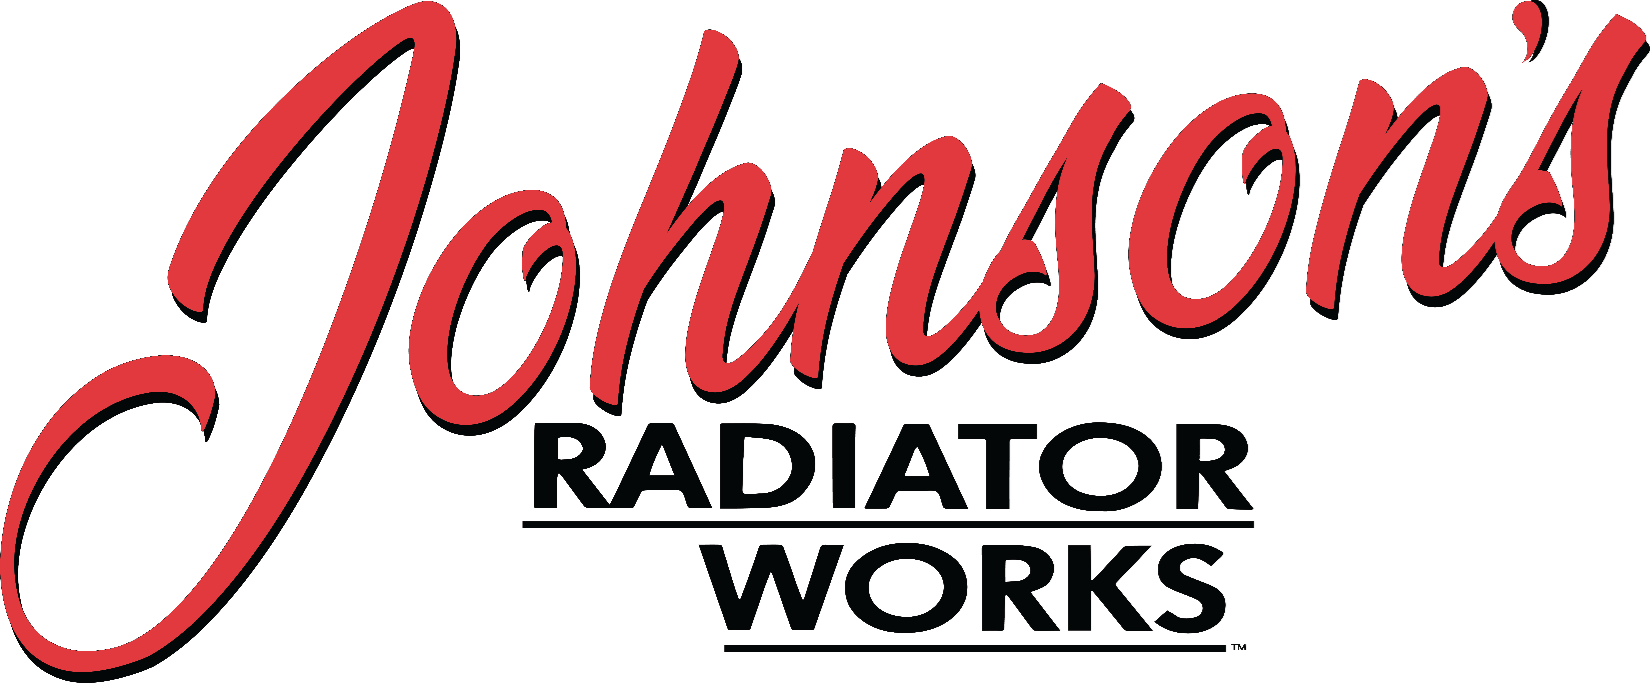 Johnson’s Hot Rod Shop Acquires Walker Radiator Works | THE SHOP